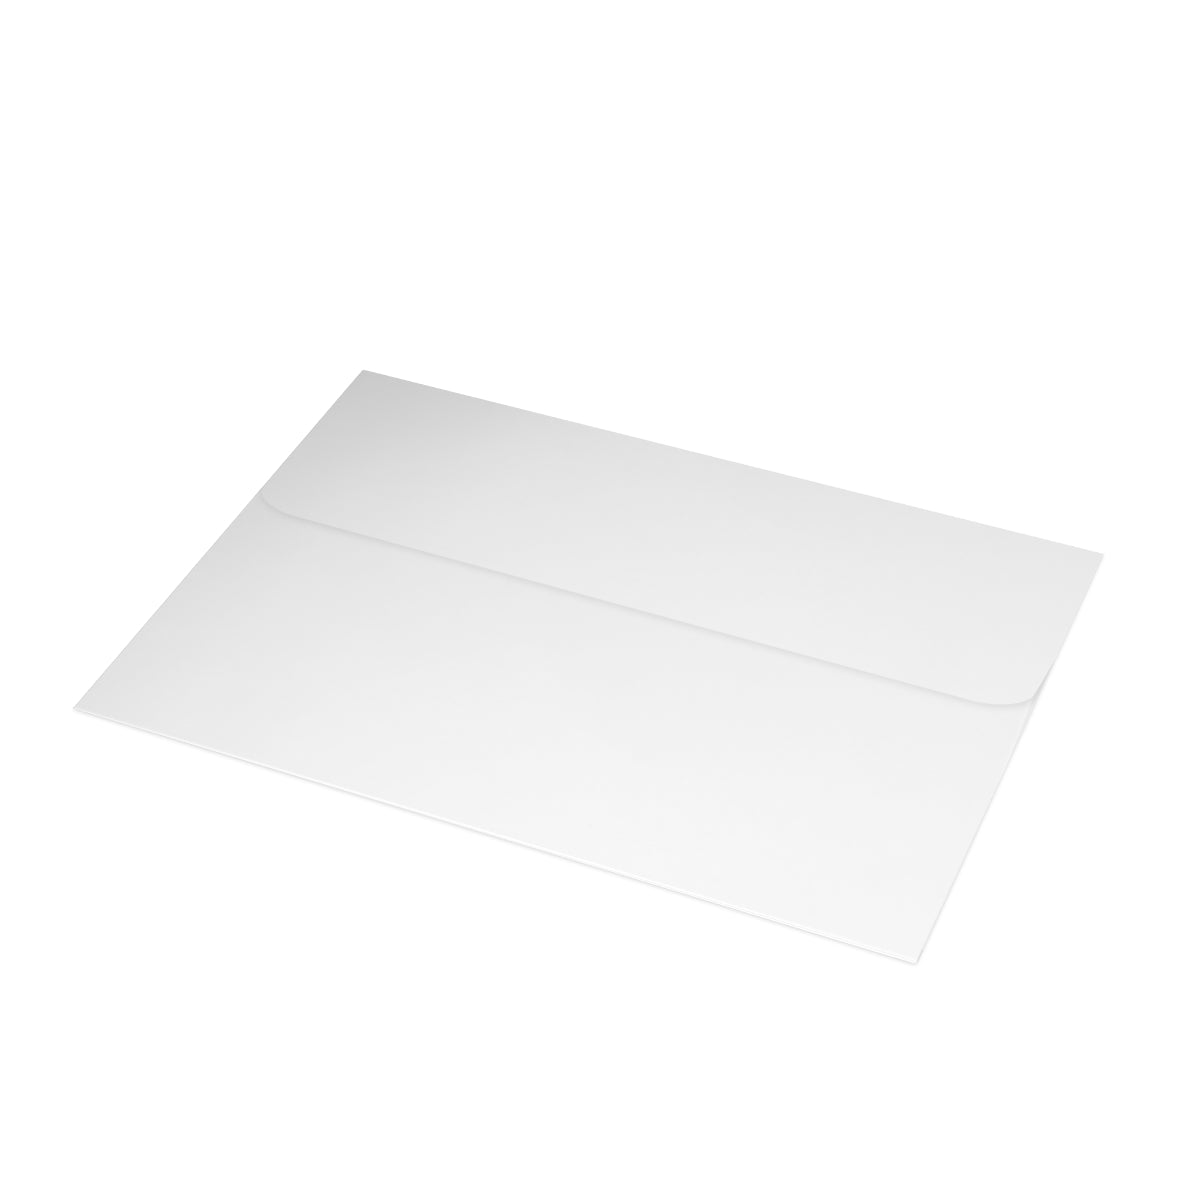 Lisbon Folded Matte Notecards + Envelopes (10pcs)